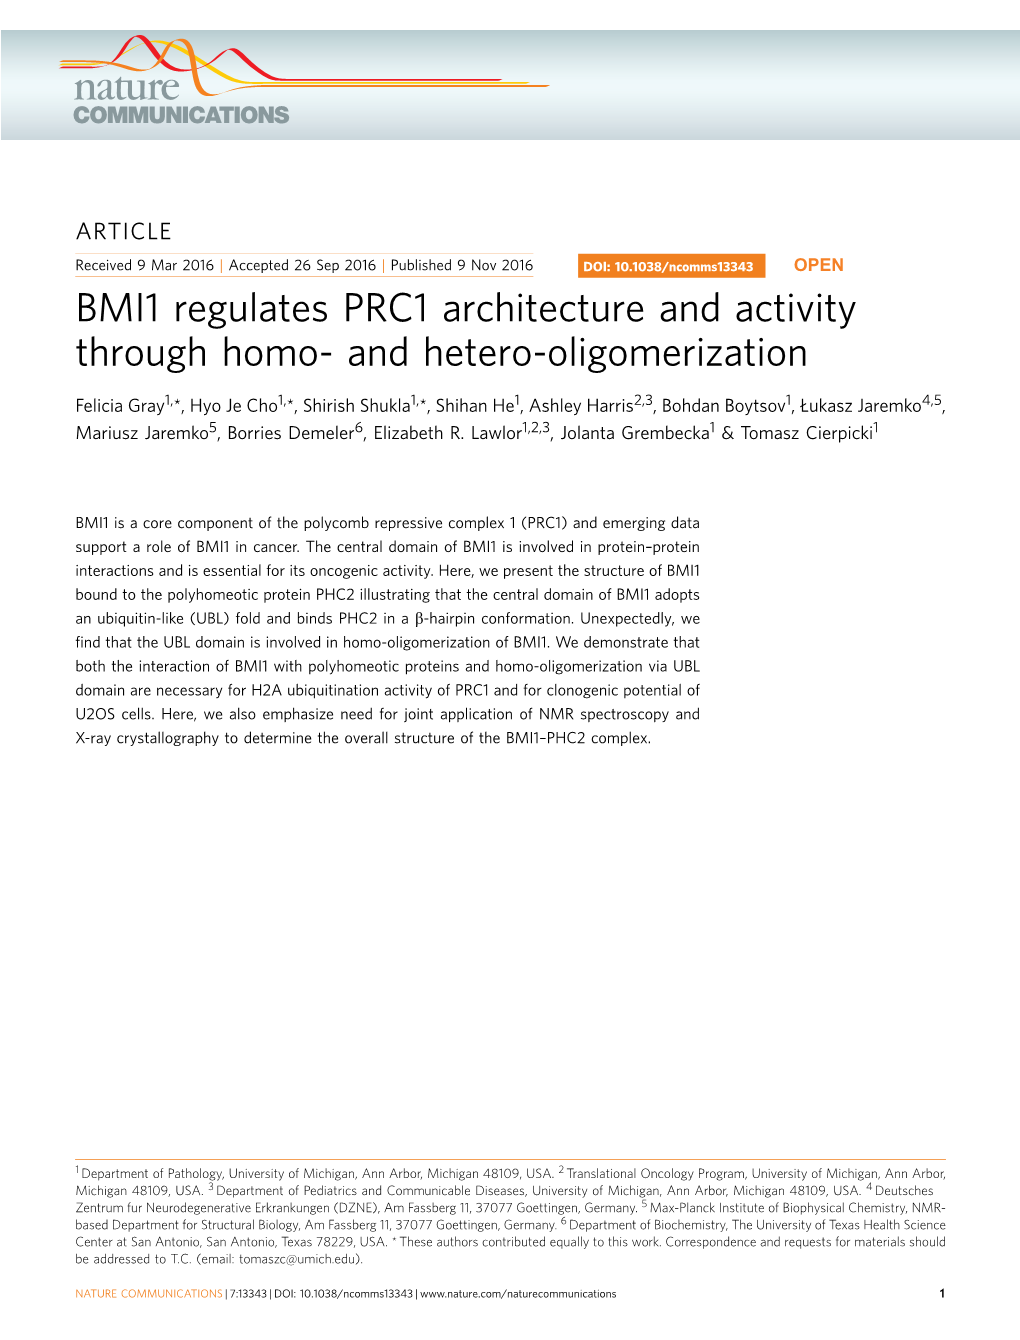 BMI1 Regulates PRC1 Architecture and Activity Through Homo- and Hetero-Oligomerization